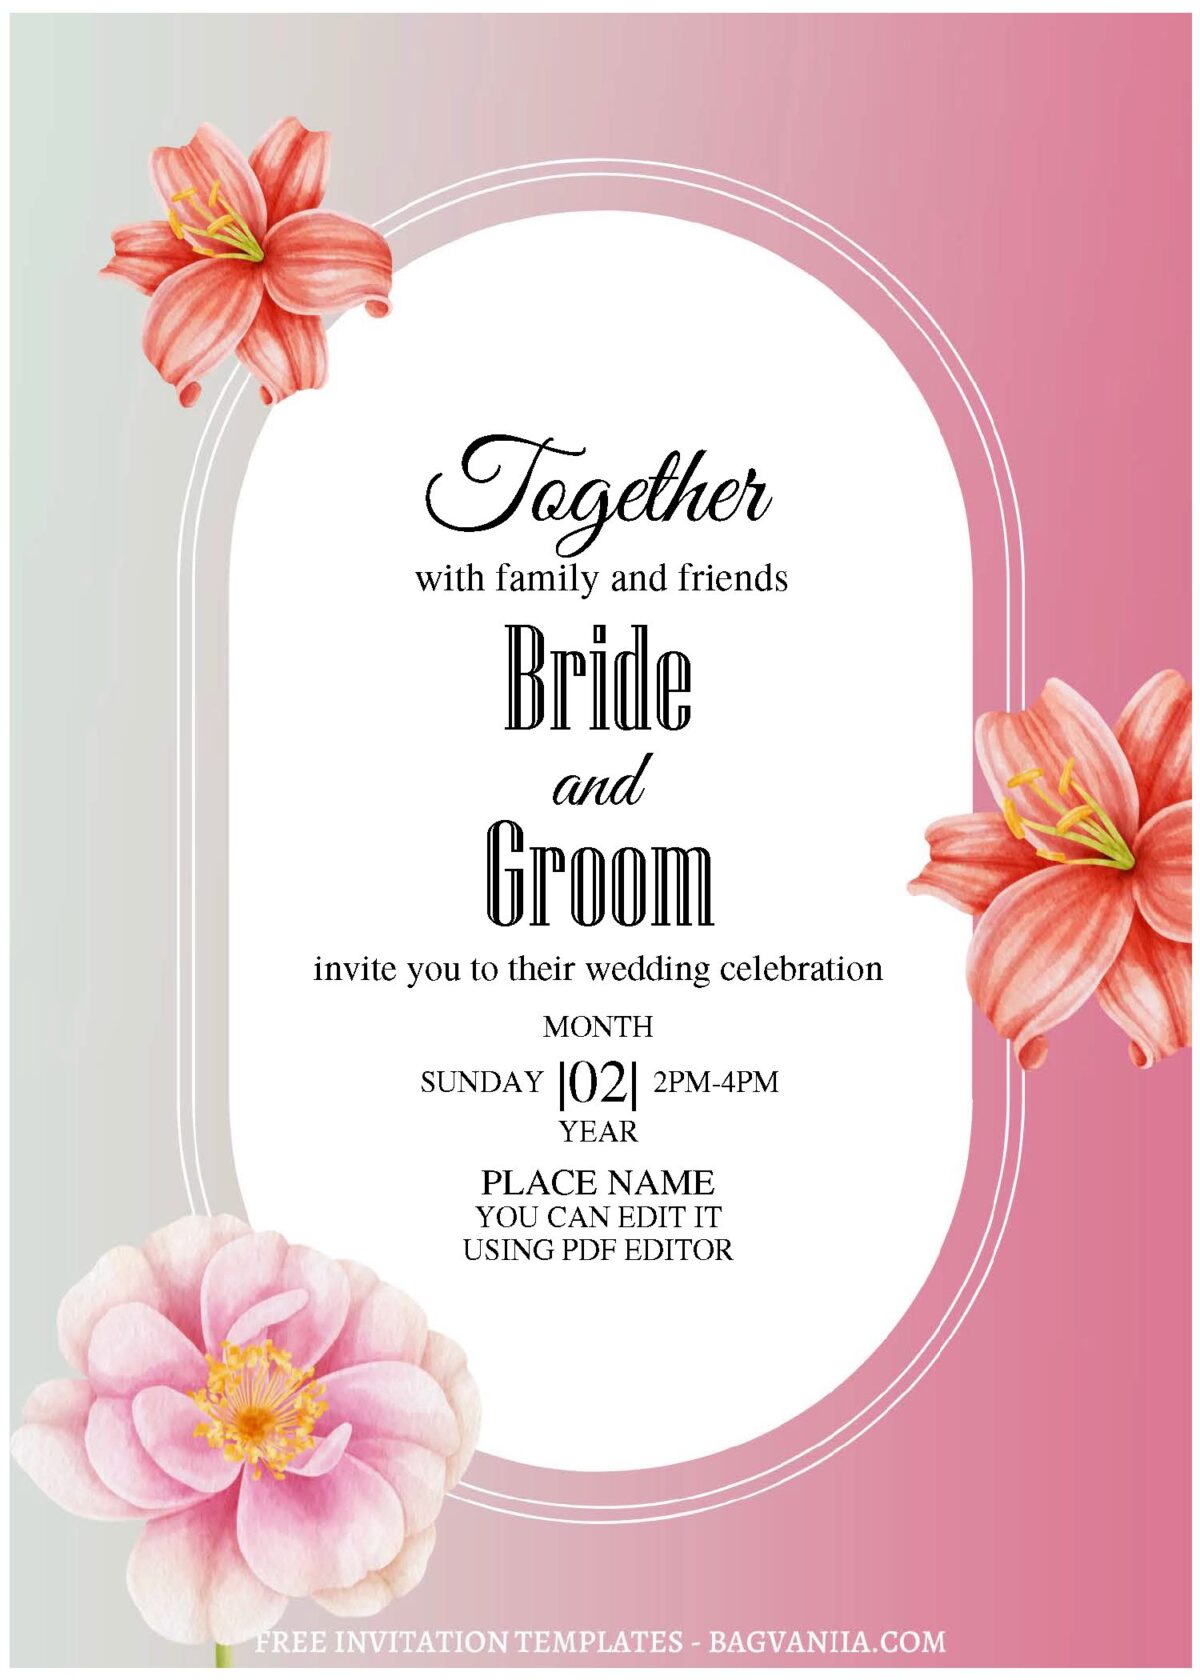 (Free Editable PDF) Minimalist Watercolor Floral Wedding Invitation Templates with enchanting roses